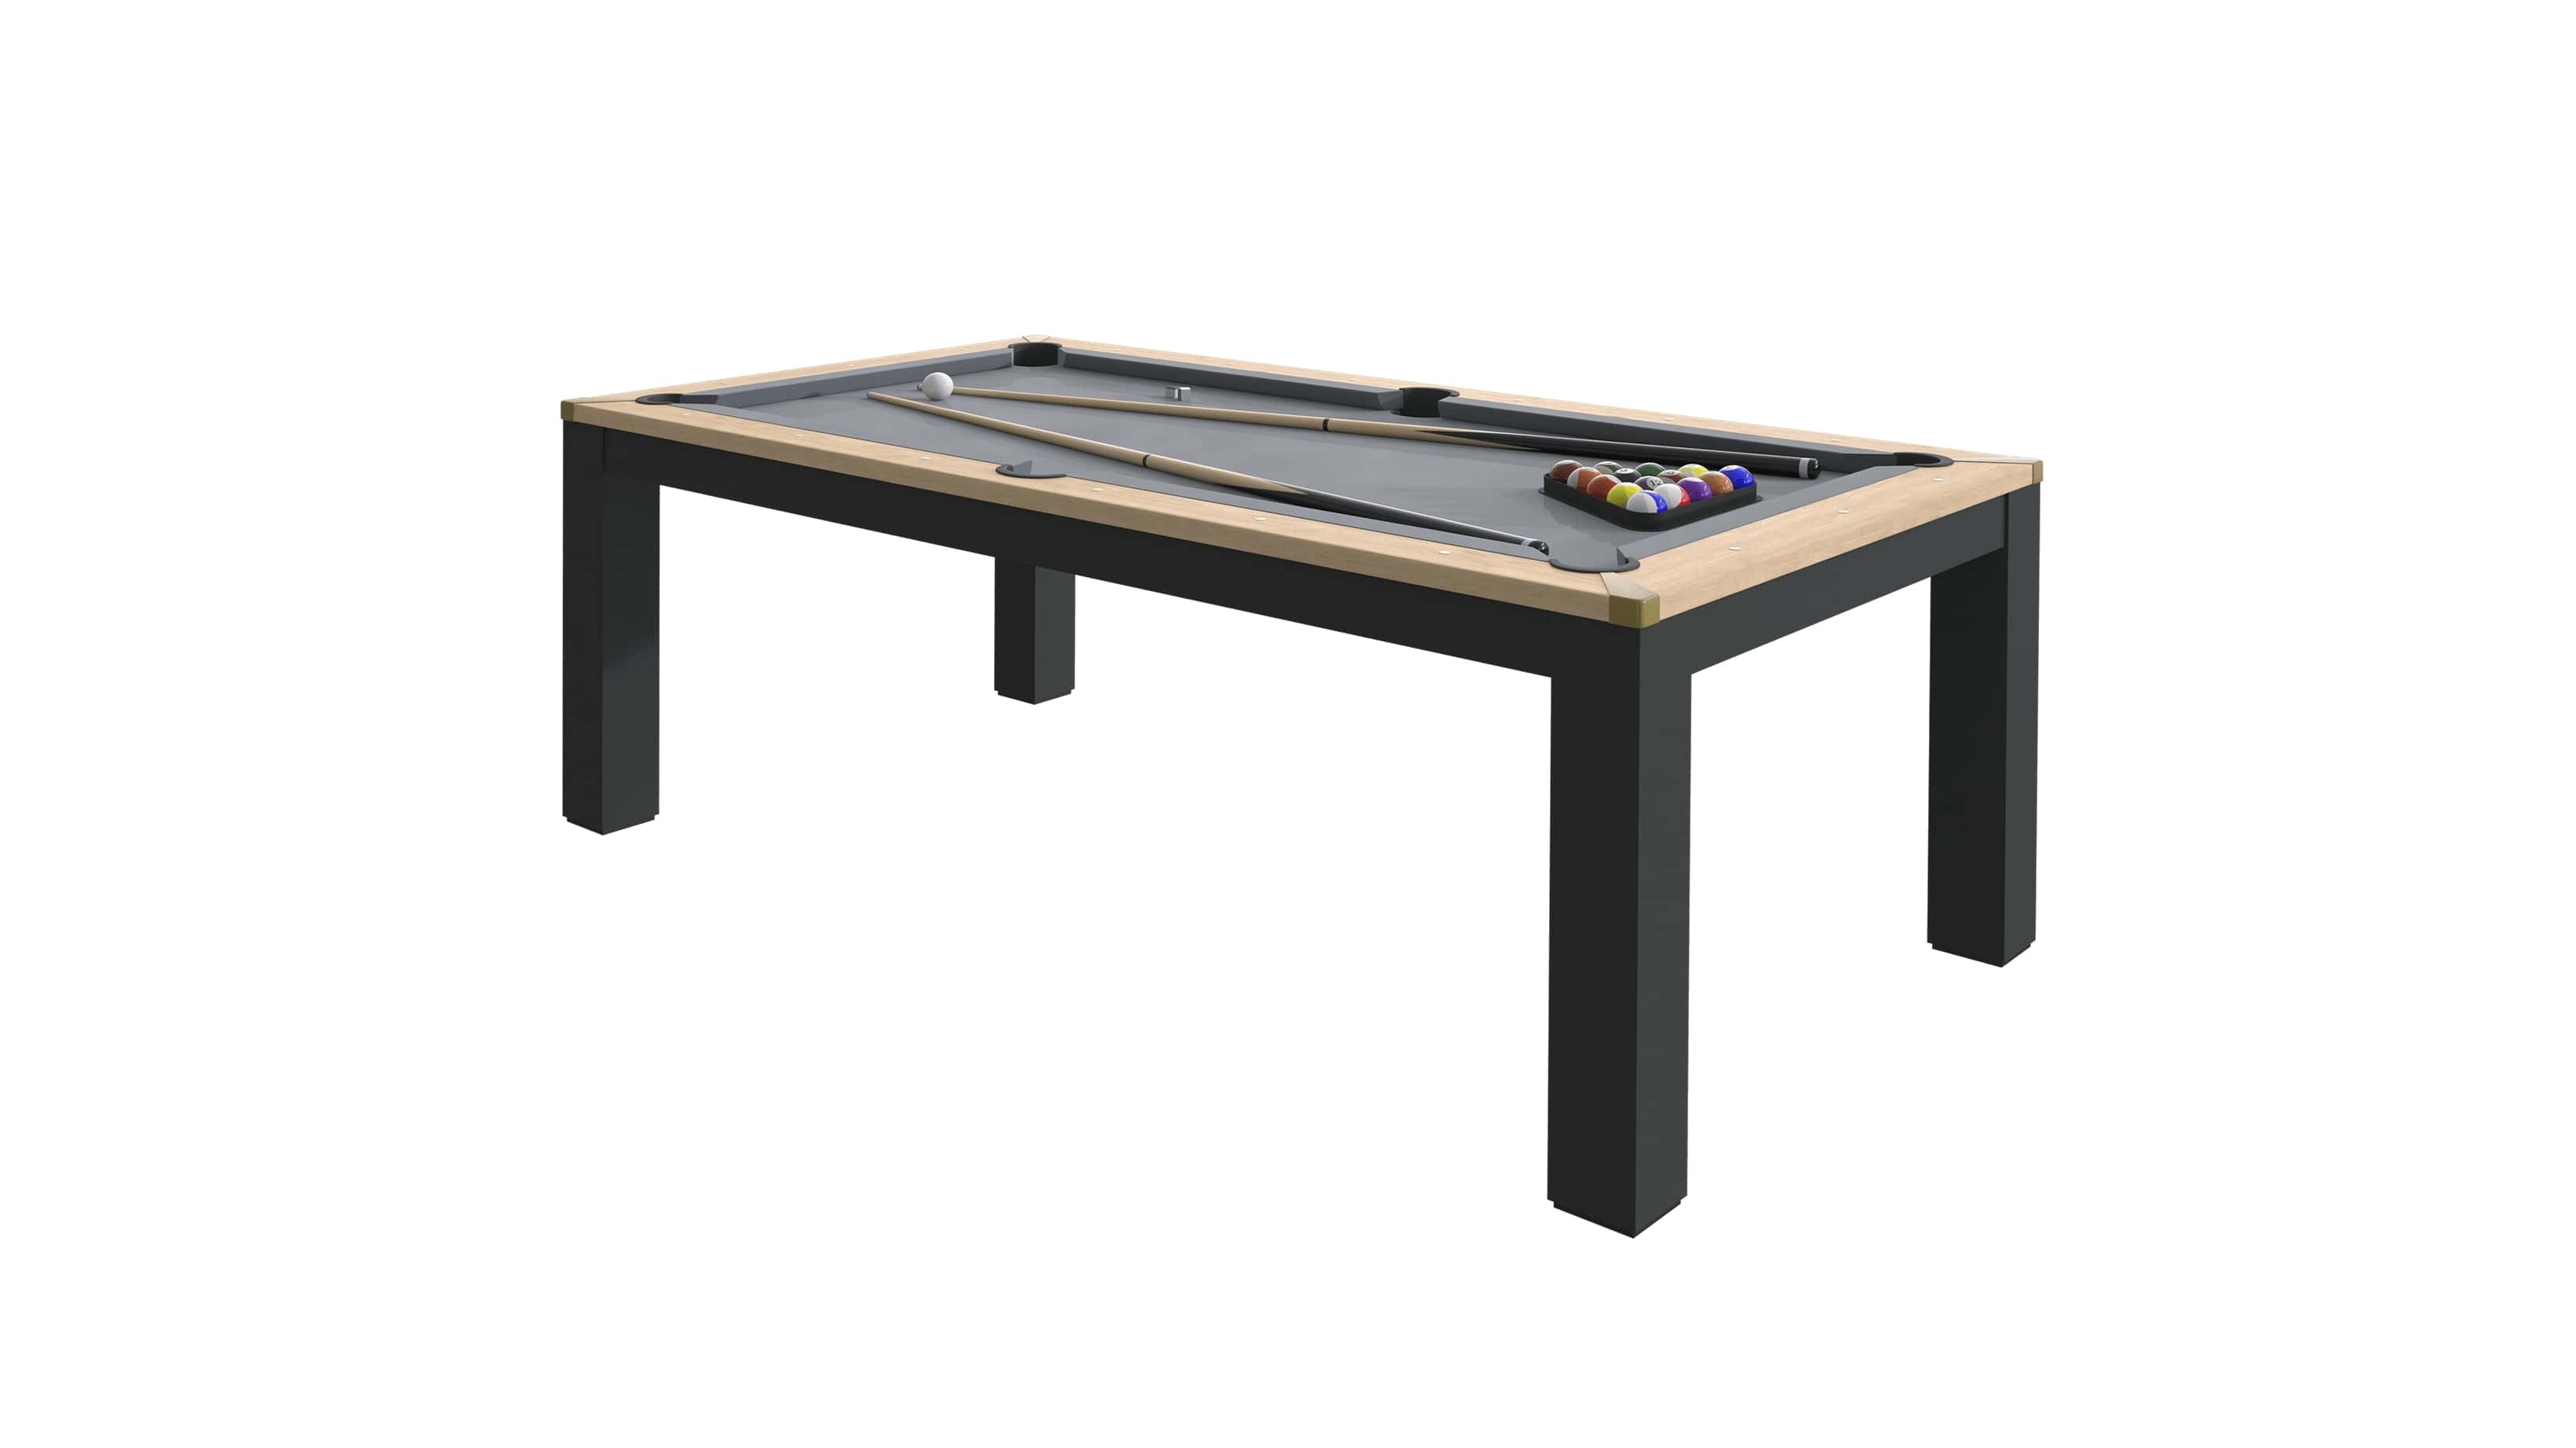 https://www.tablebillard.fr/2465/table-a-manger-transformable-en-billard-6ft-bois-et-pieds-noirs-multifonction-design-elegant.jpg